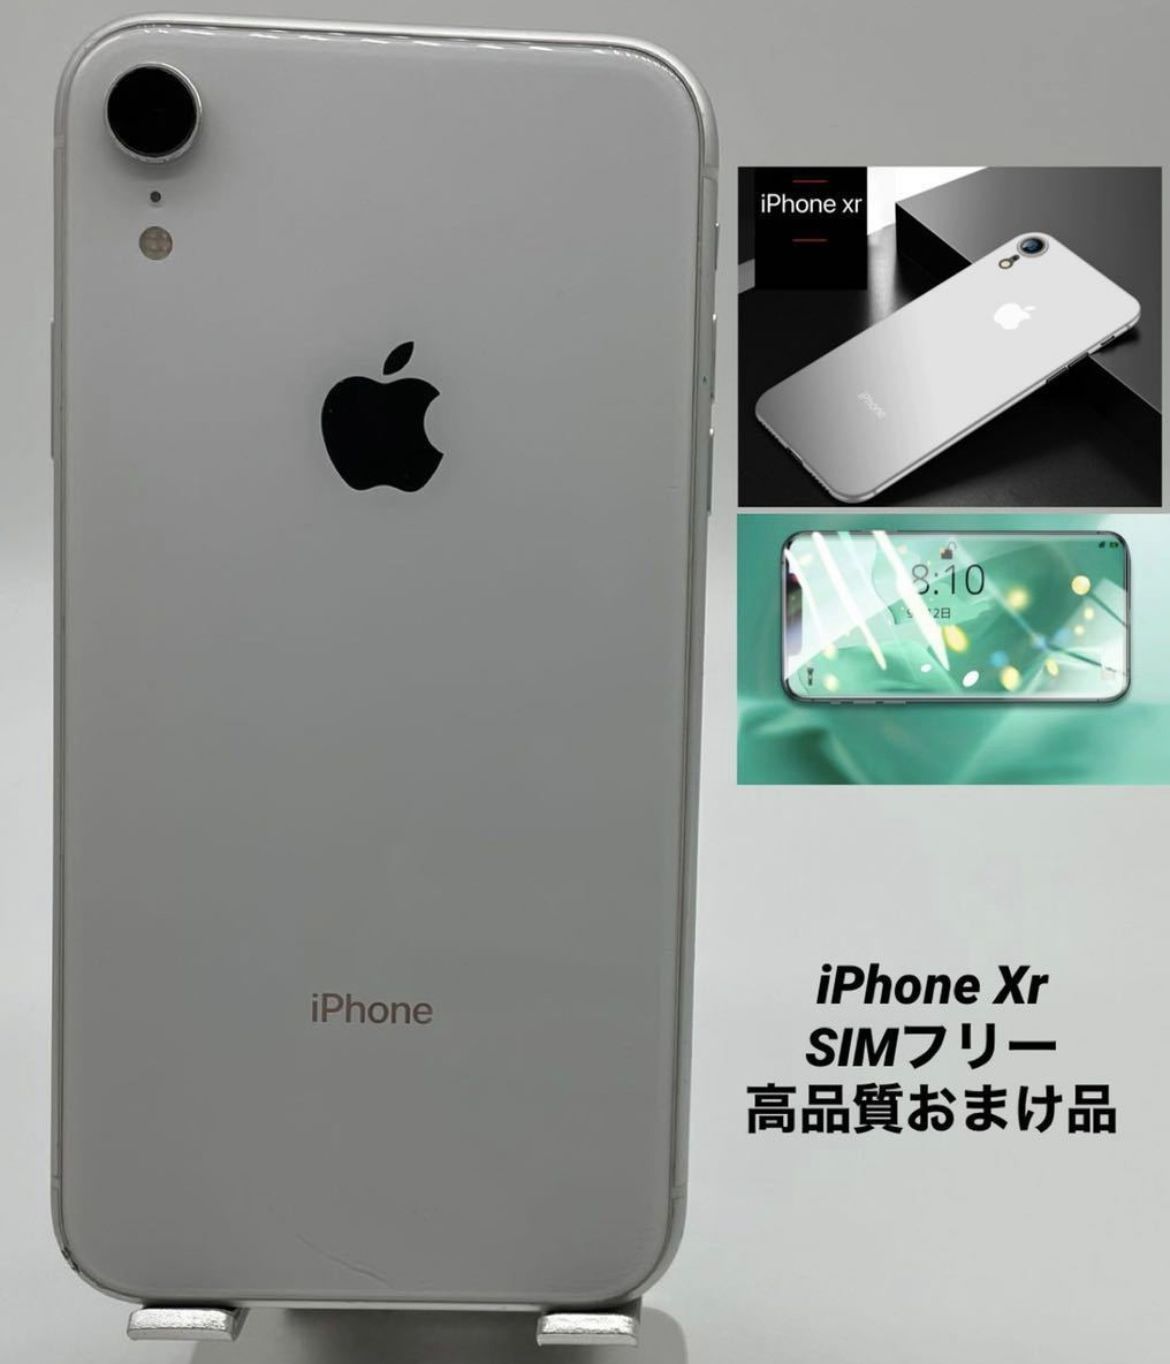 iPhone XR White 128 GB SIMフリー - スマートフォン本体